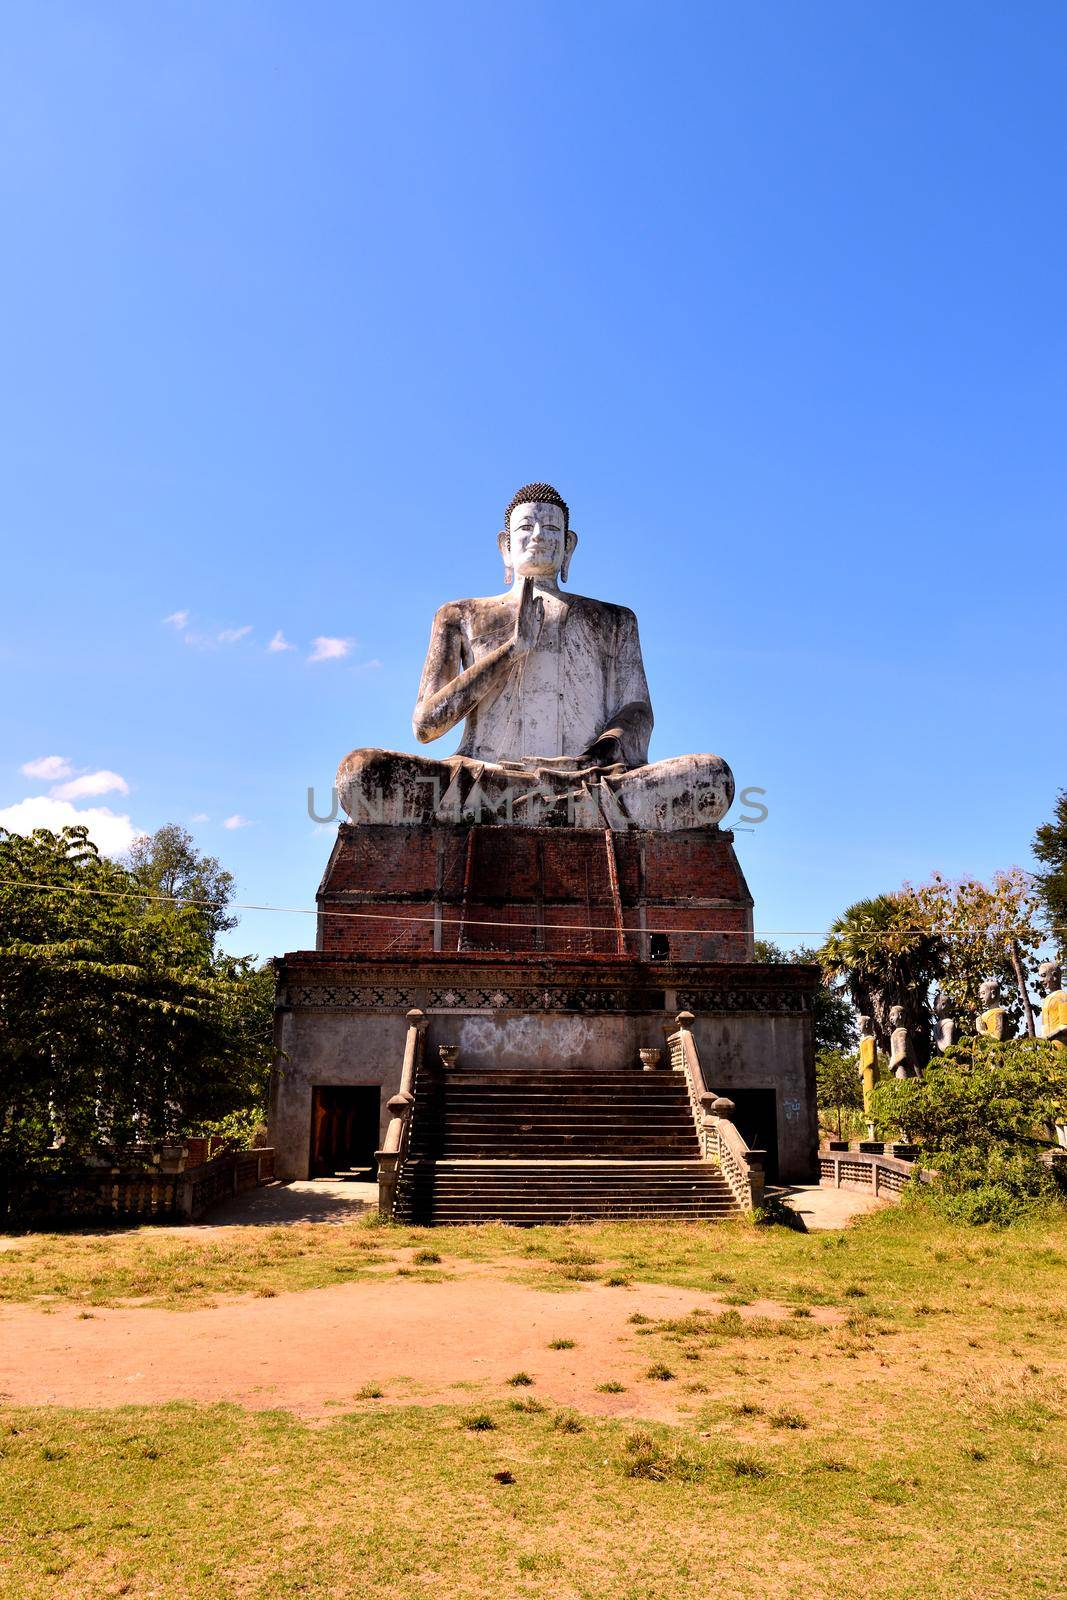 View of the giant Buddha in the Wat Ek Phnom complex, Battambang by silentstock639